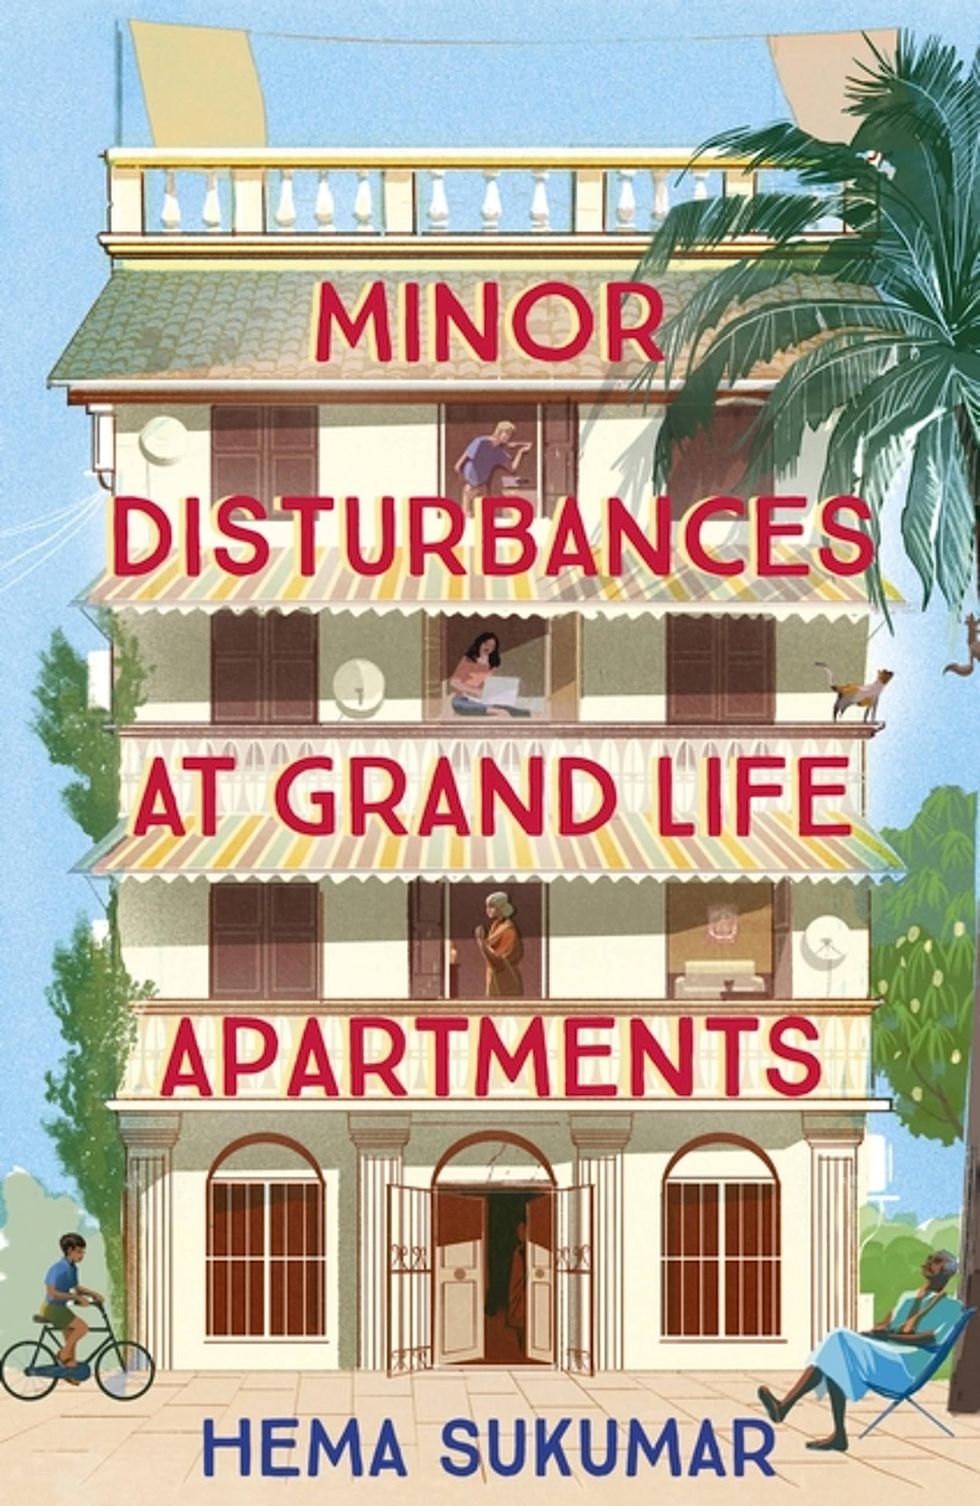 Minor Disturbances At Grand Life Apartments by Hema Sukumar (Coronet)